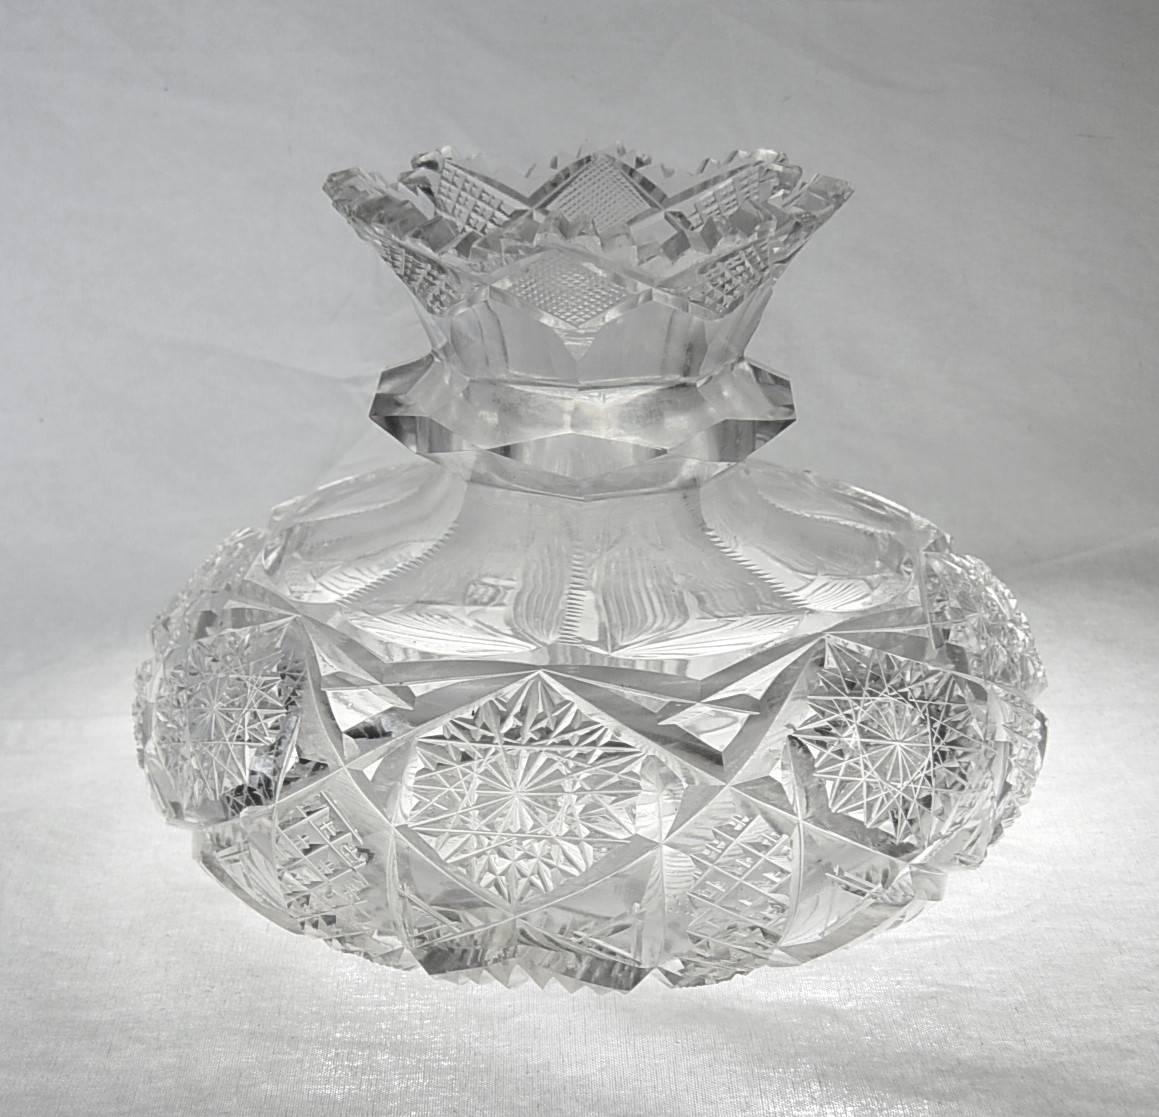 Antique English cut crystal vase.
Dimension: 8